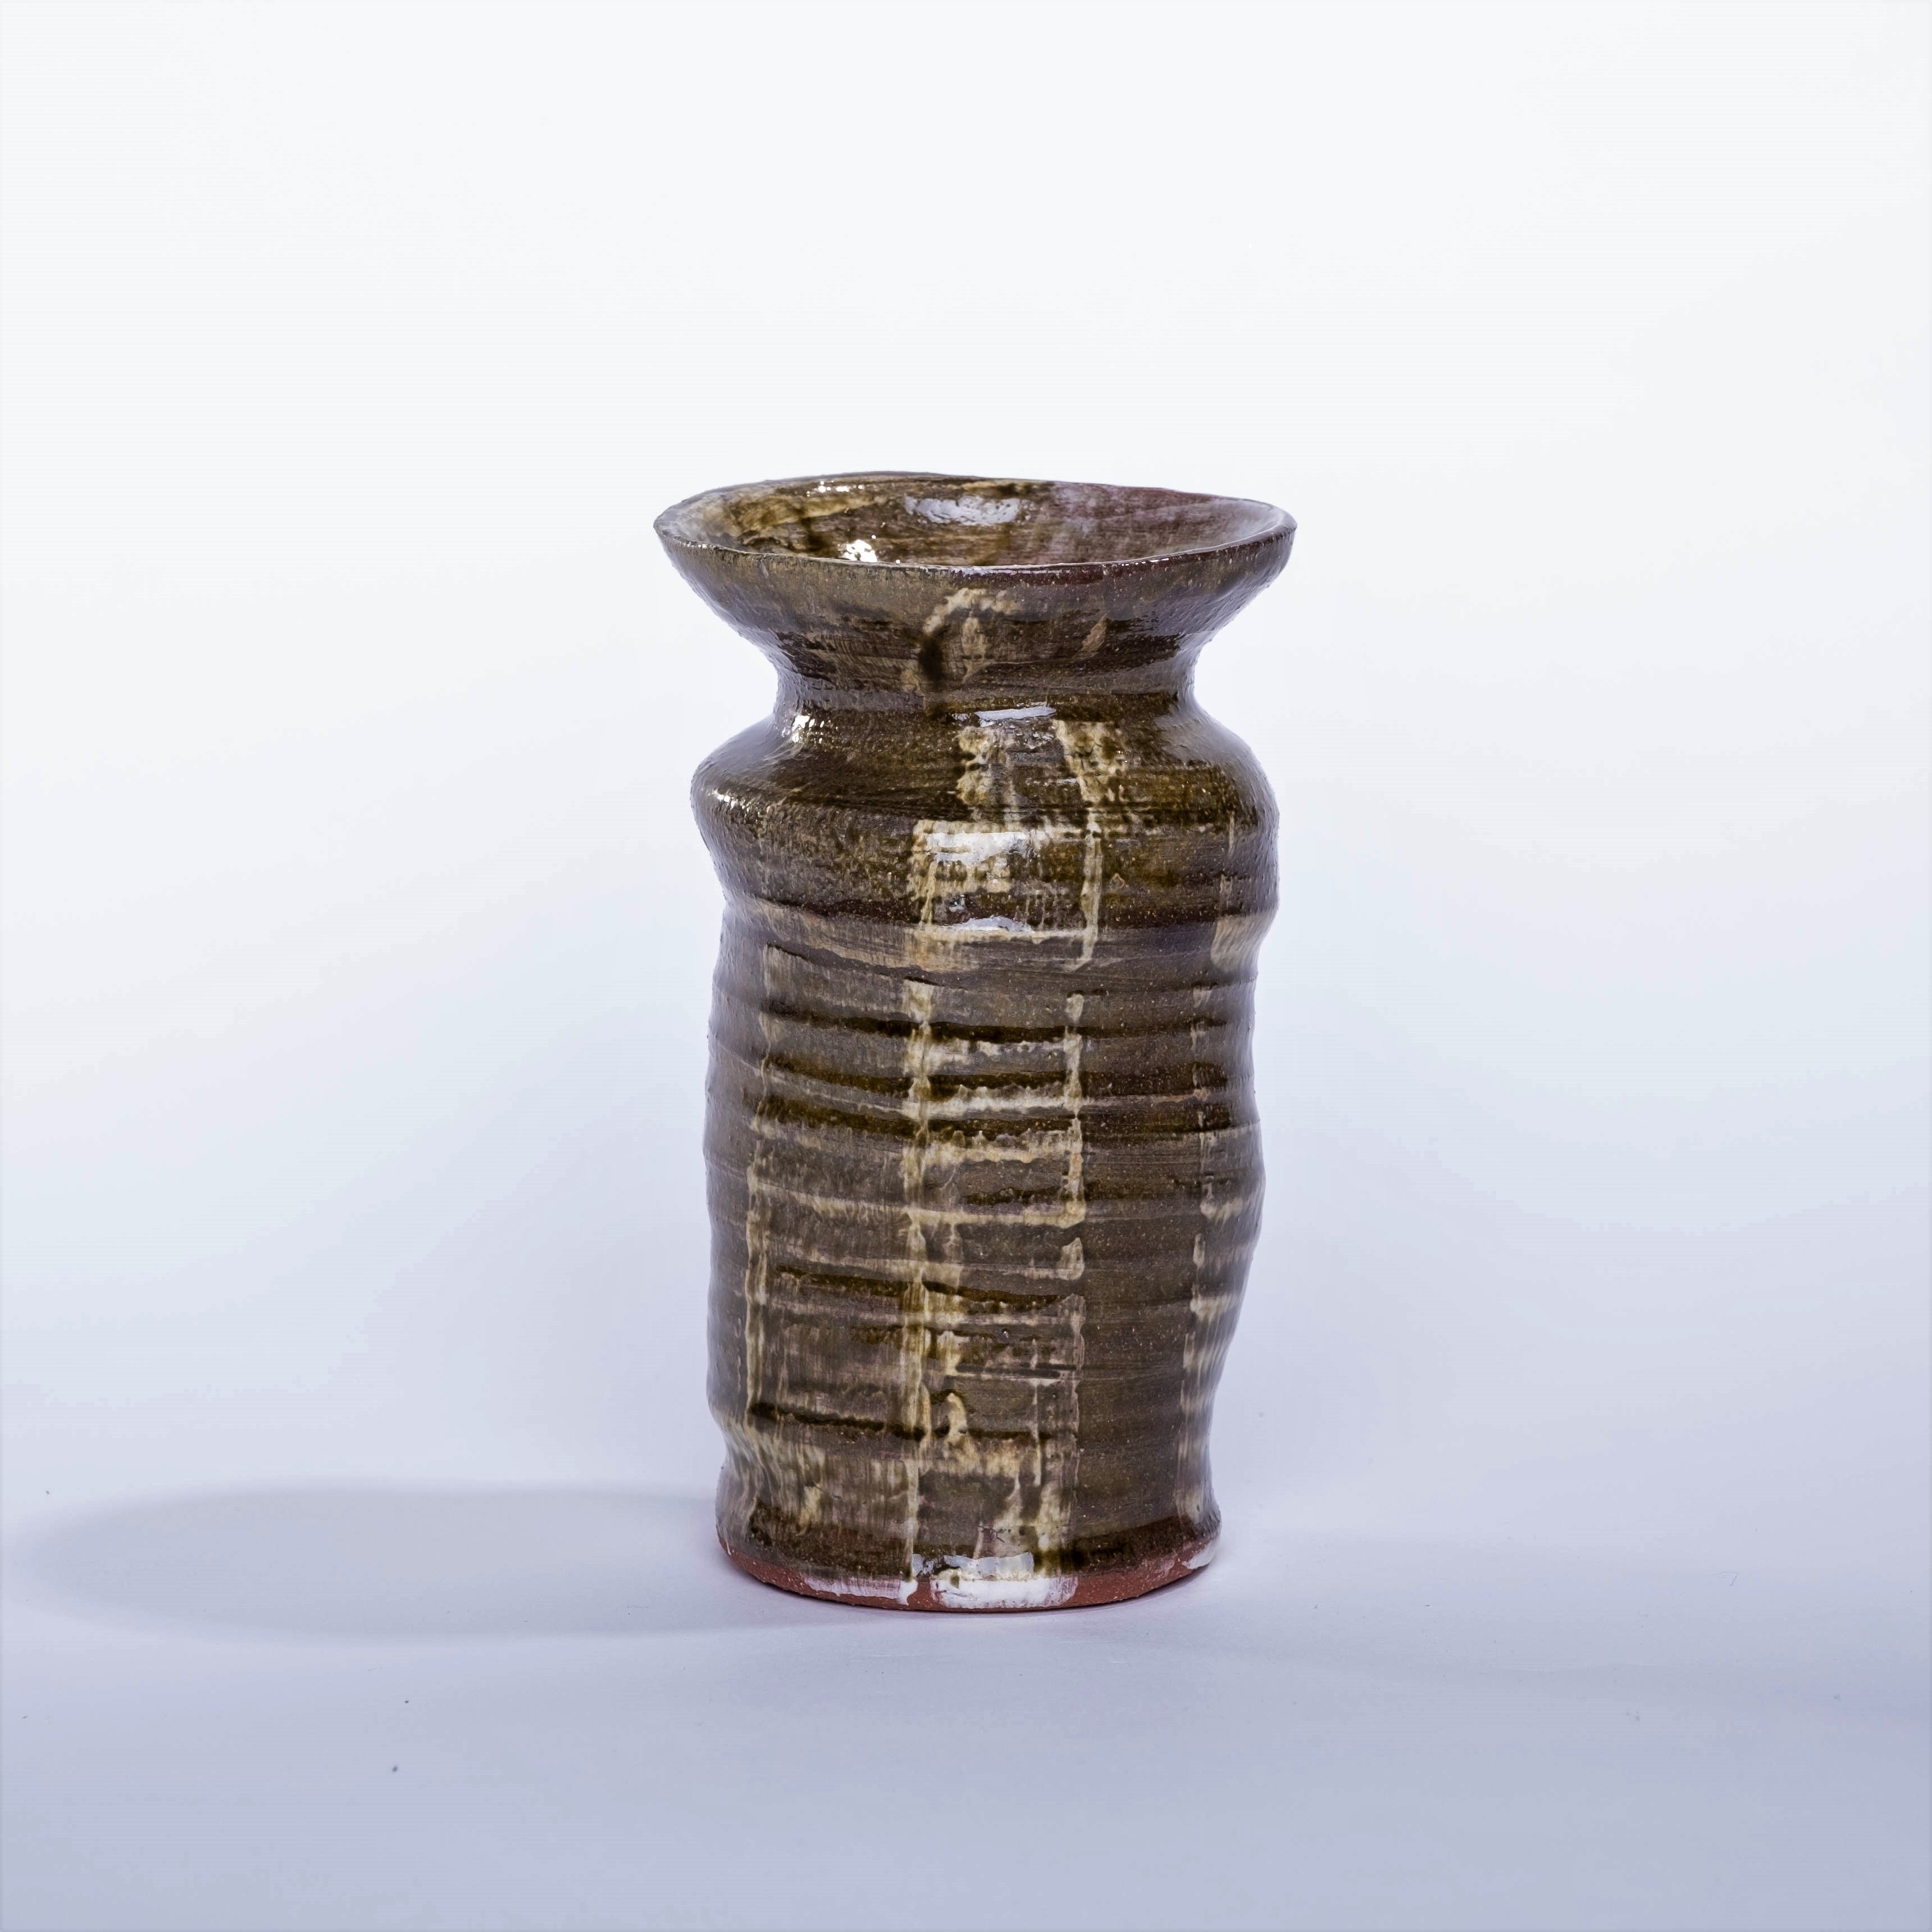 64 Wobbly Ash Vase by Sick Ceramics